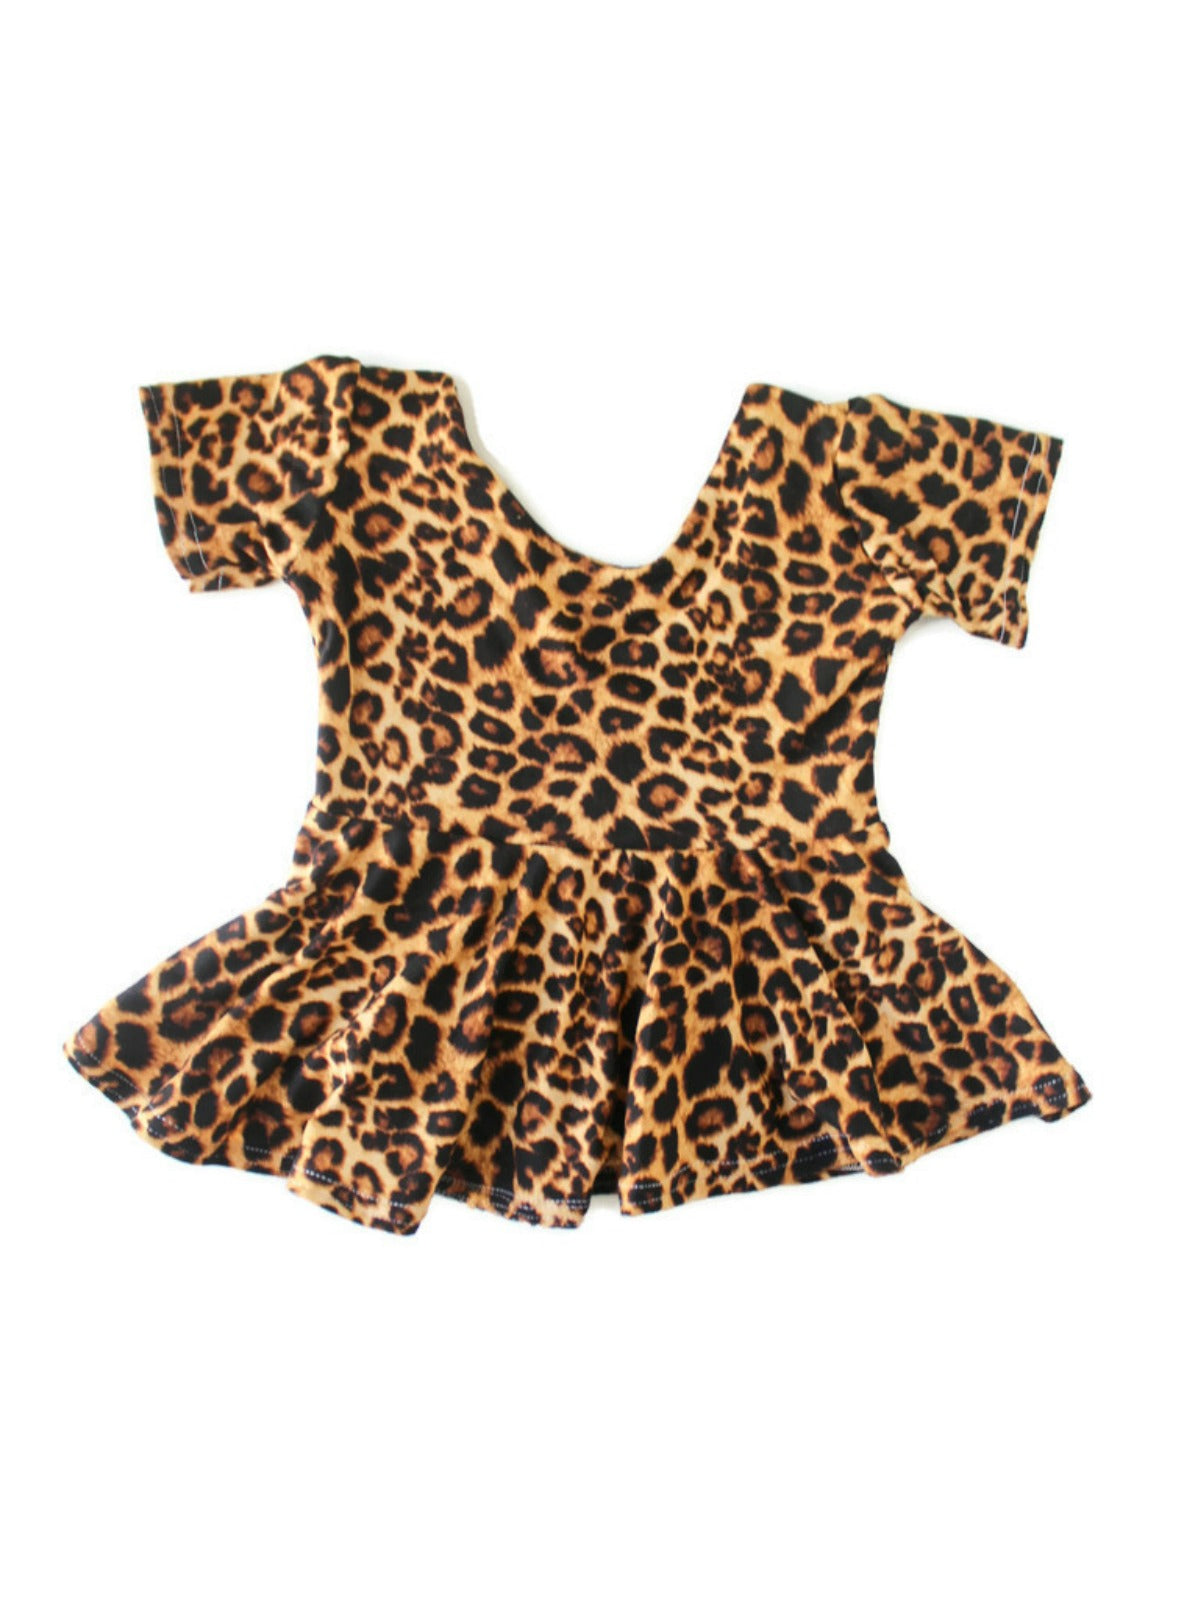 little girls brown and black leopard print dress